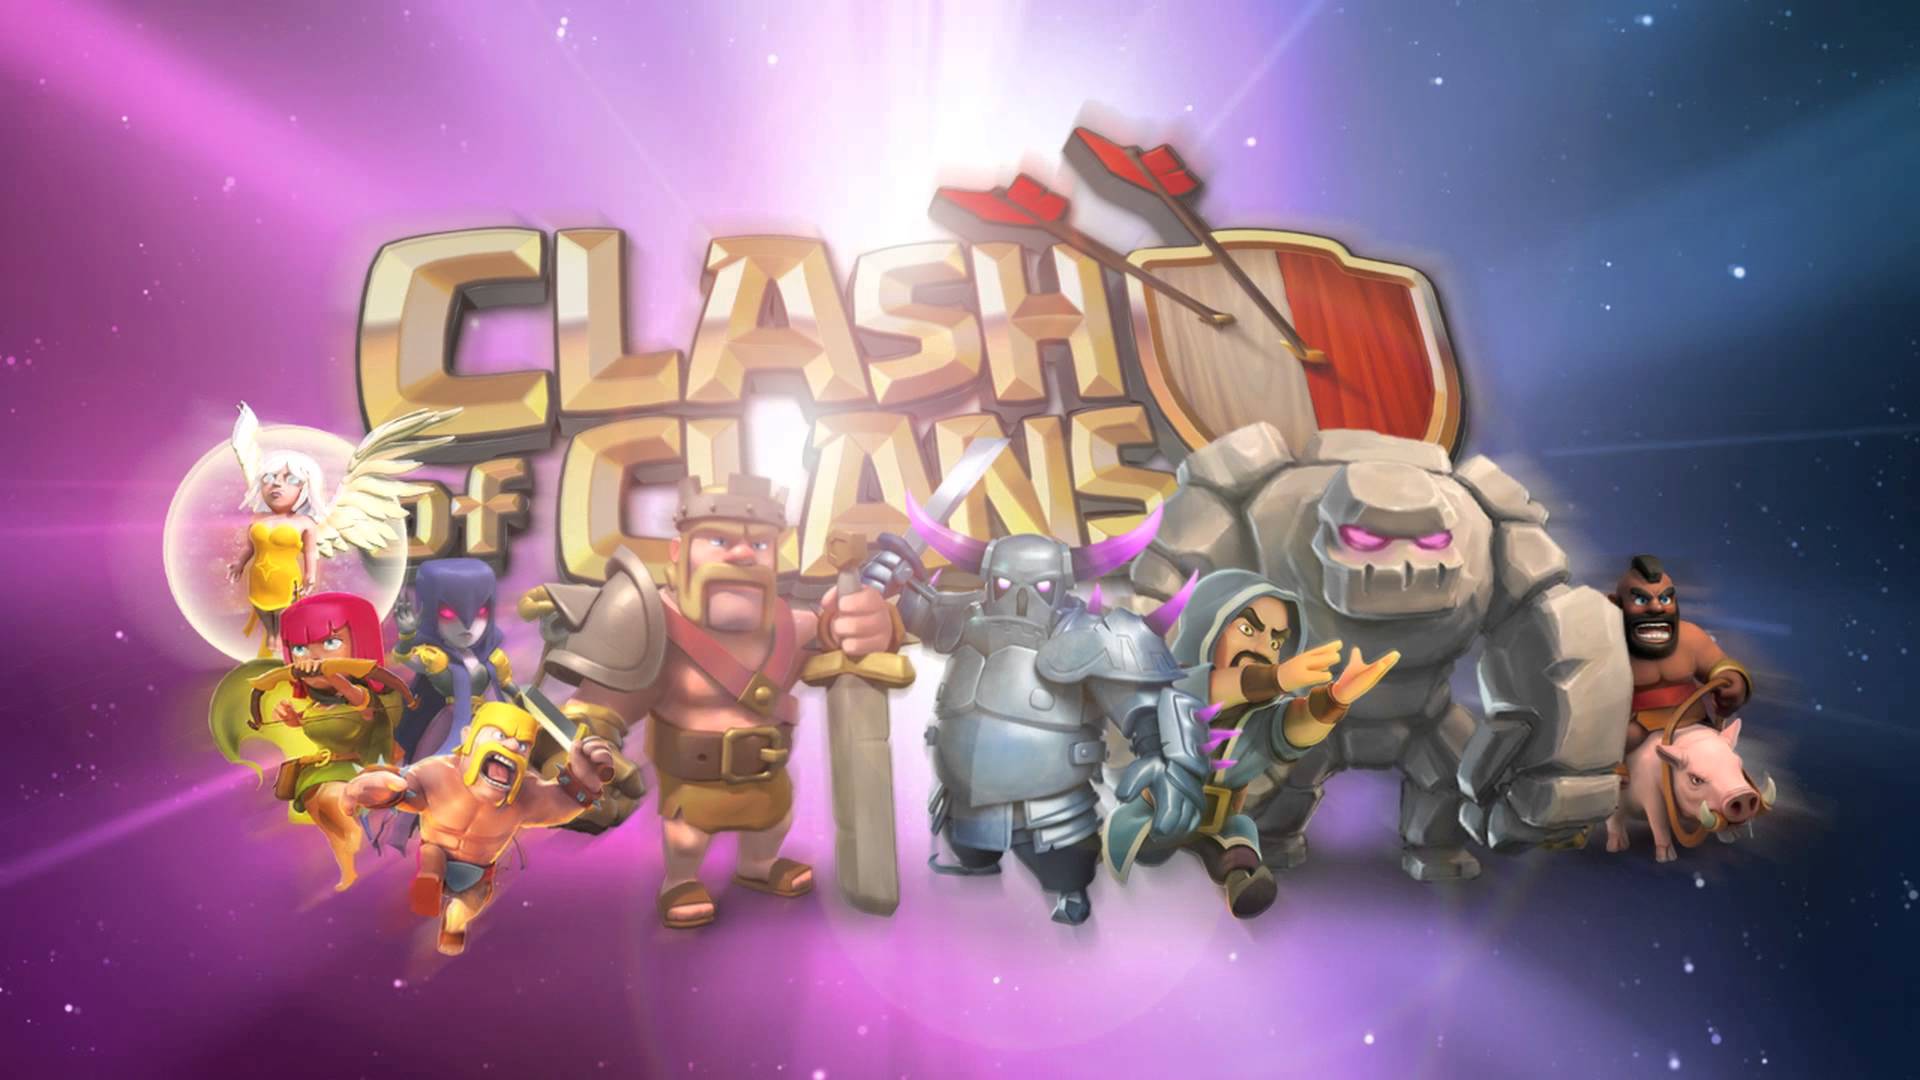 Clash of Clans - HD Art, Wallpaper, Background, Channel Art